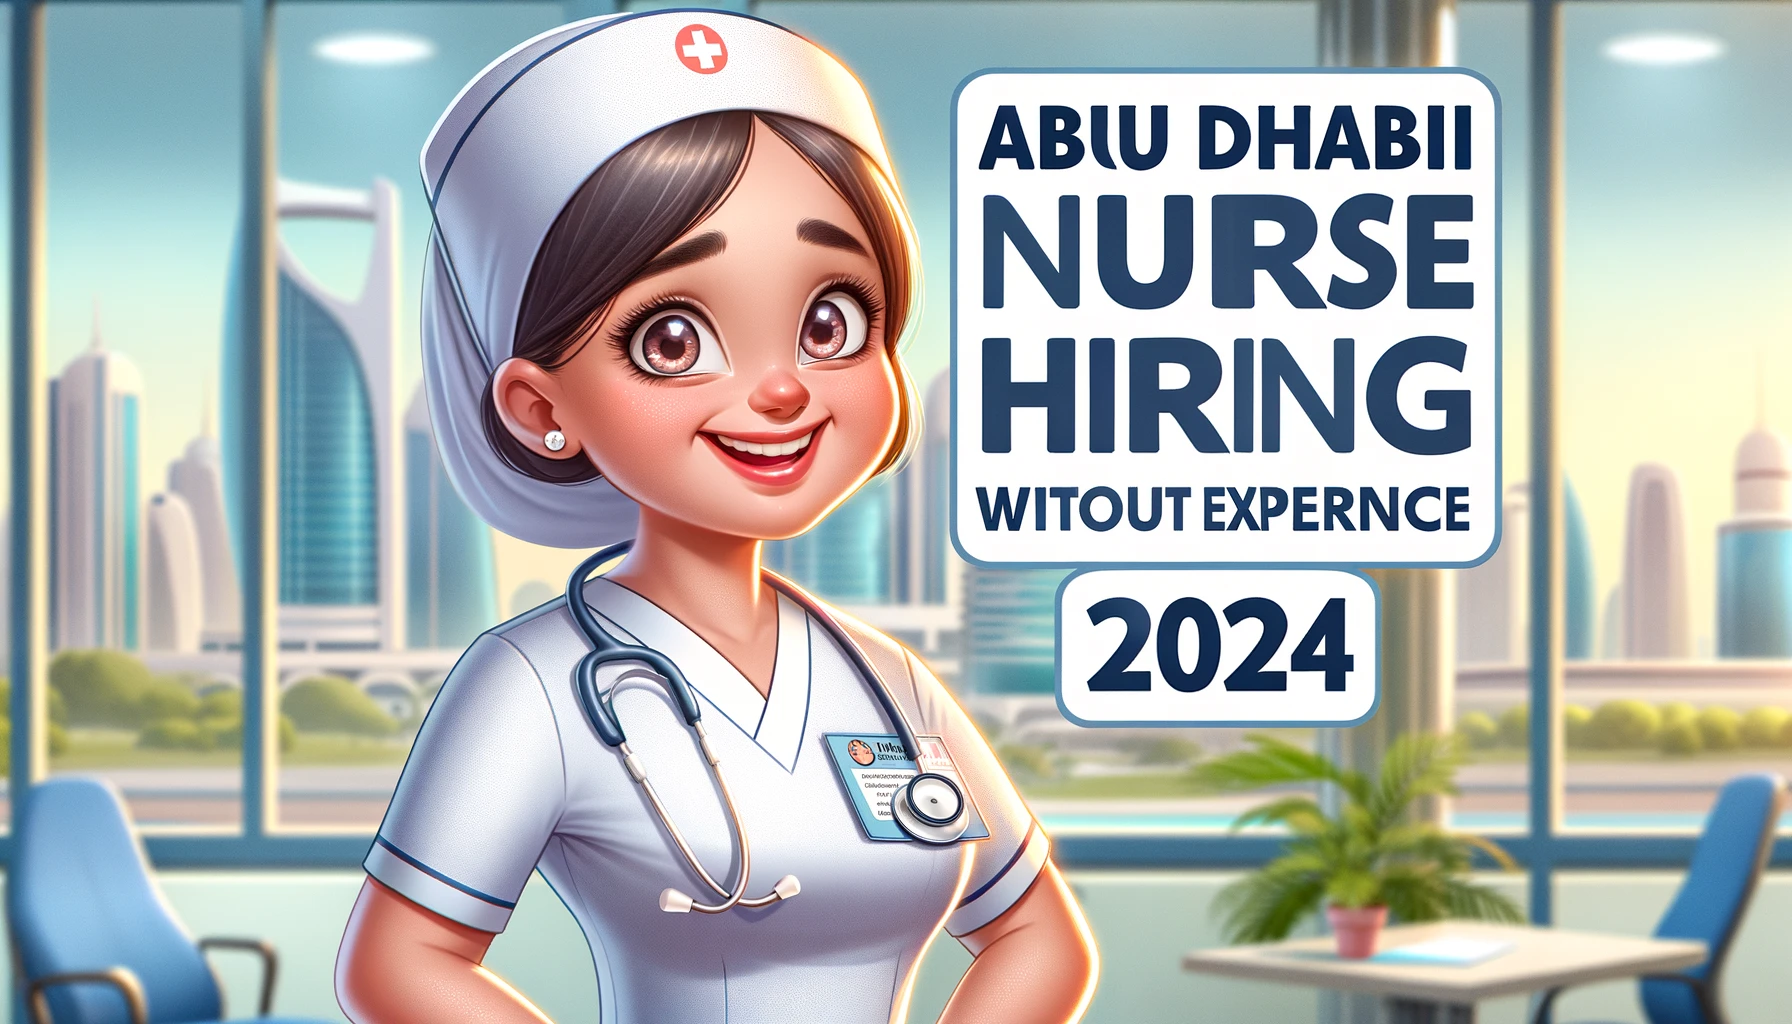 Abu Dhabi Nurse hiring without experience 2024